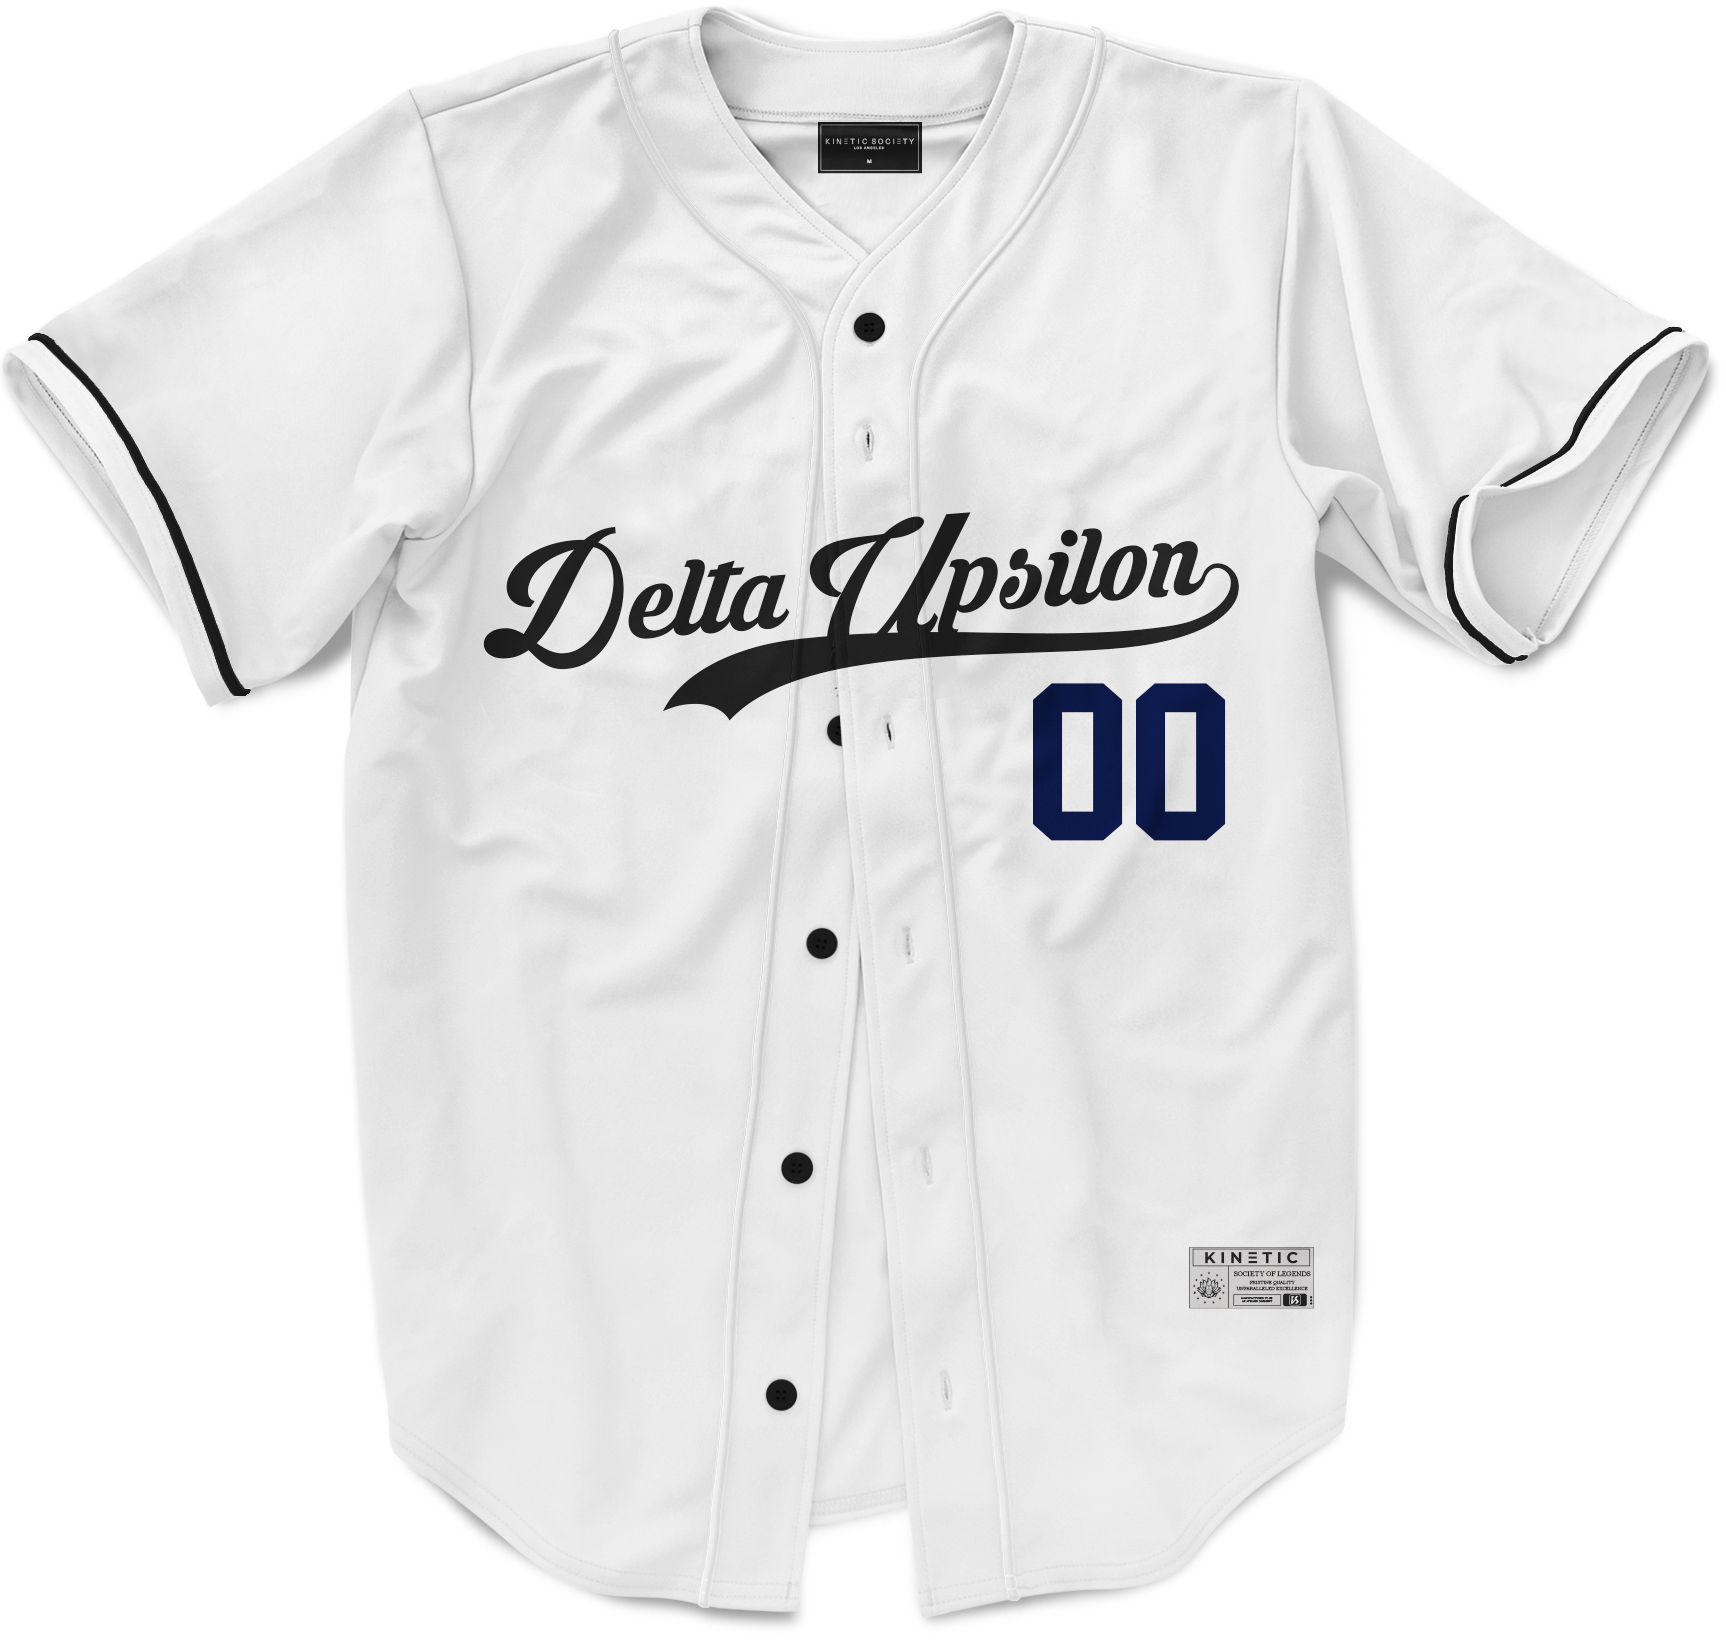 Delta Upsilon - Classic Ballpark Blue Baseball Jersey